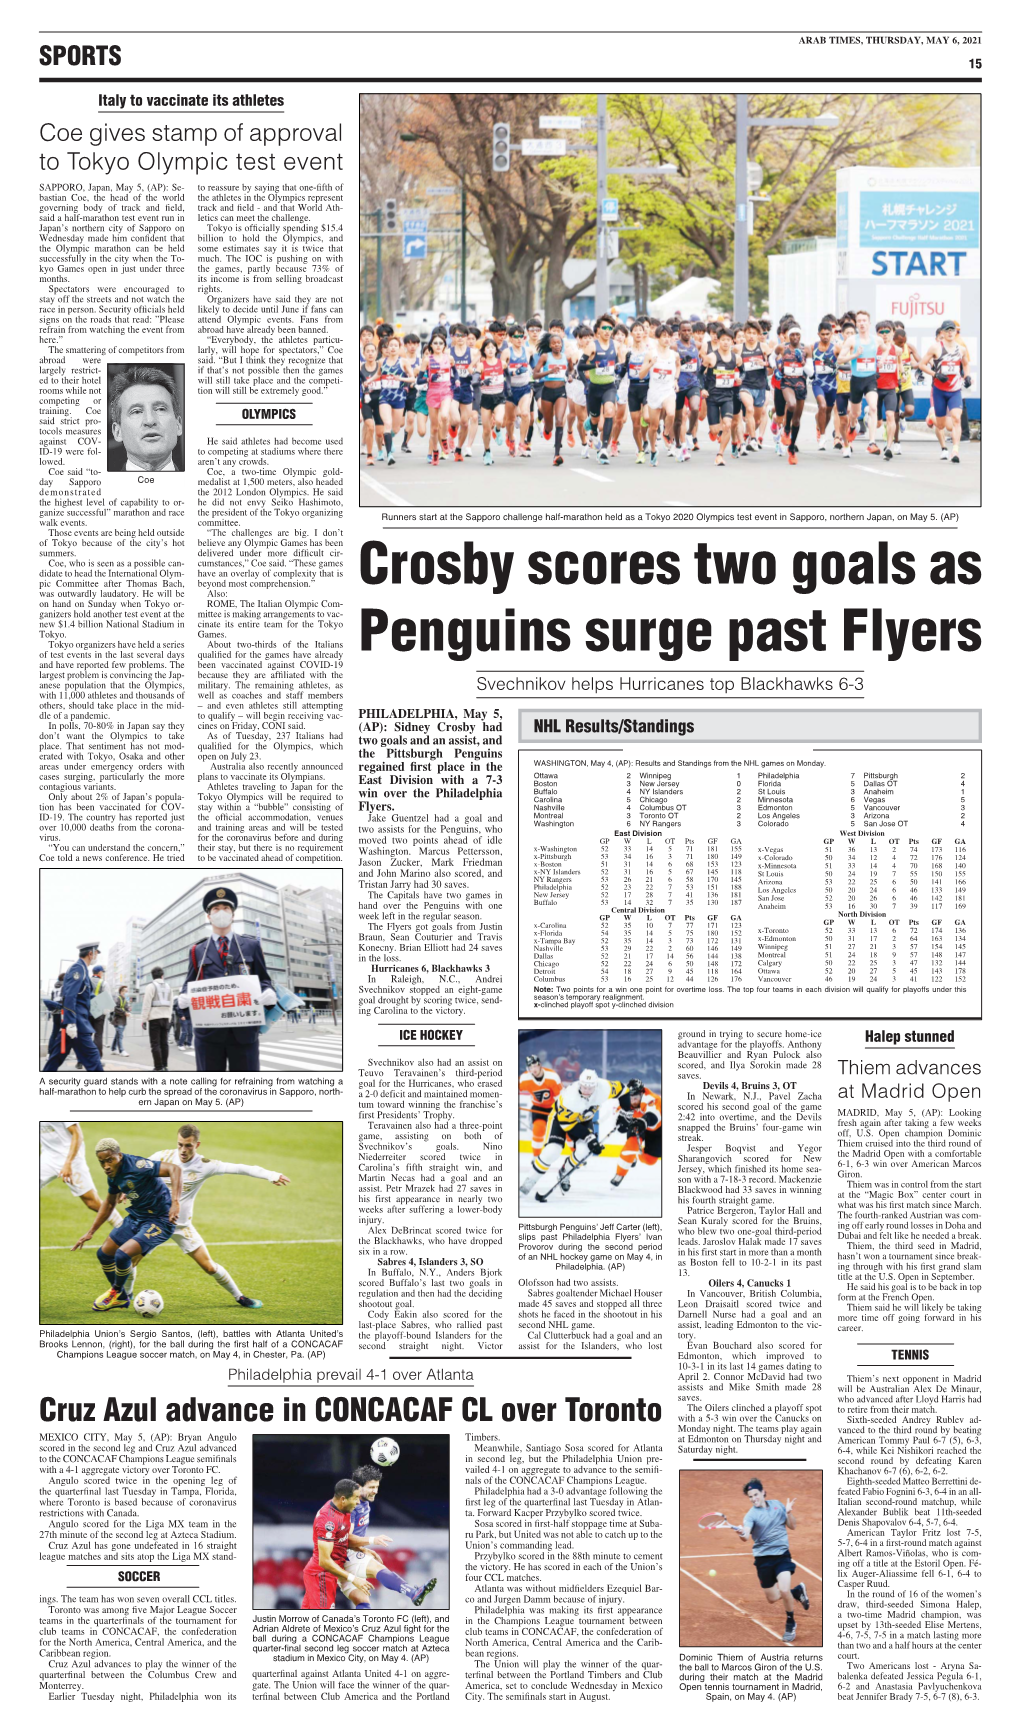 Crosby Scores Two Goals As Penguins Surge Past Flyers